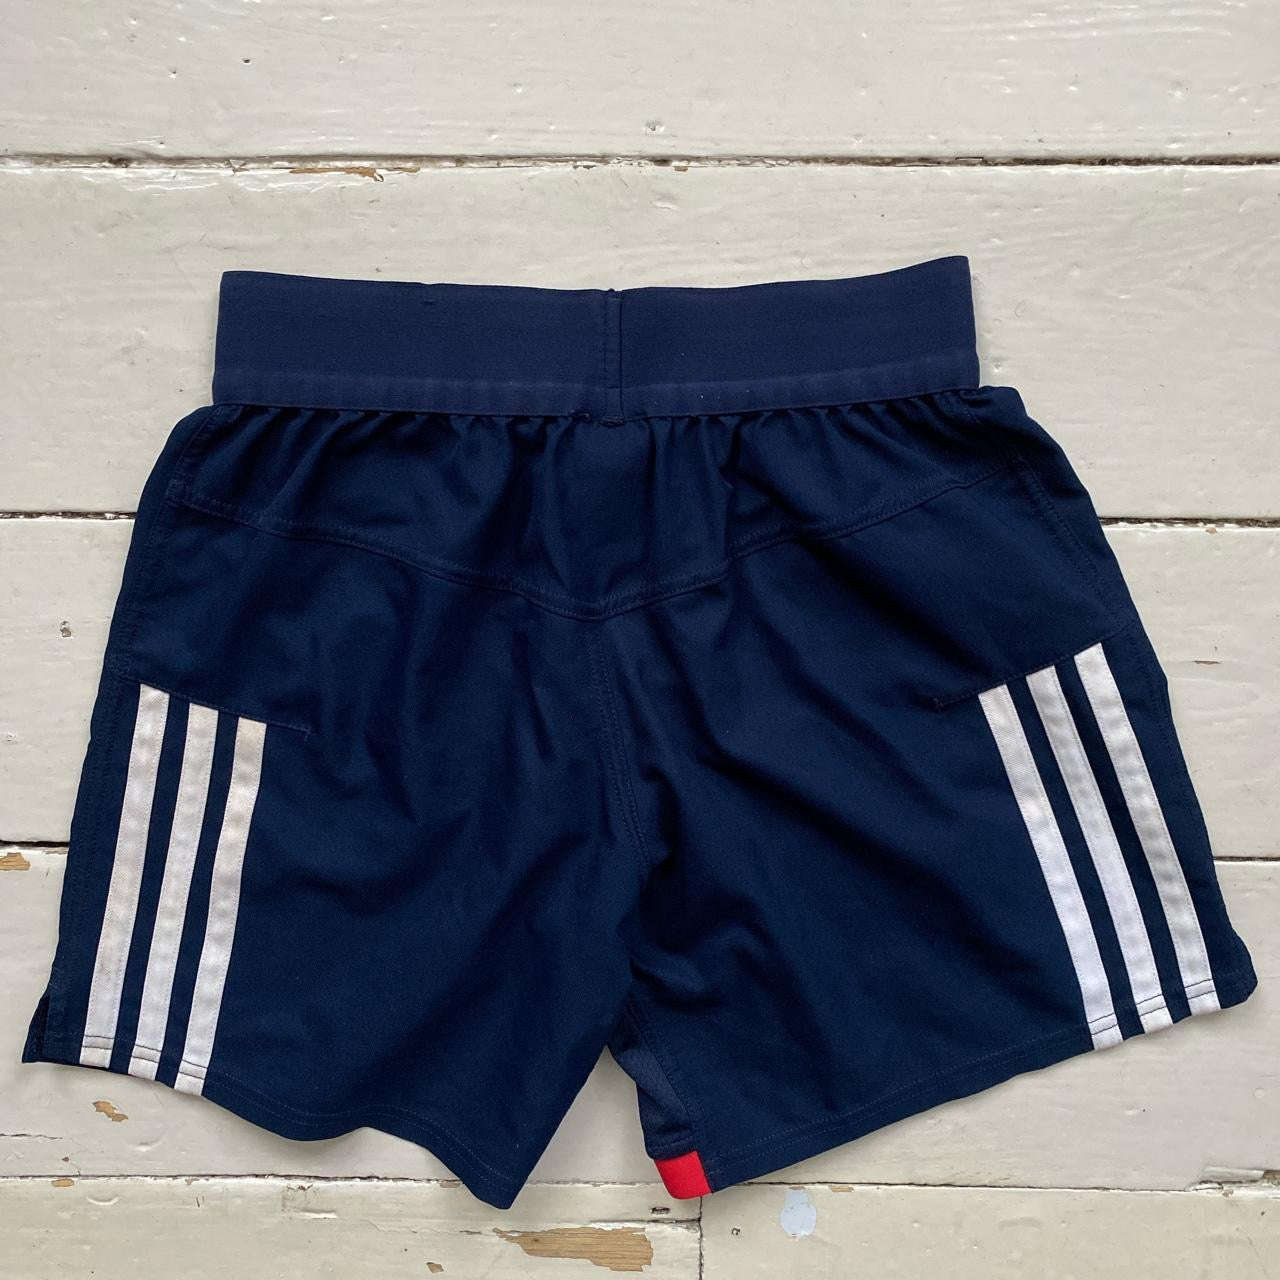 Adidas France Navy Shorts (Medium)